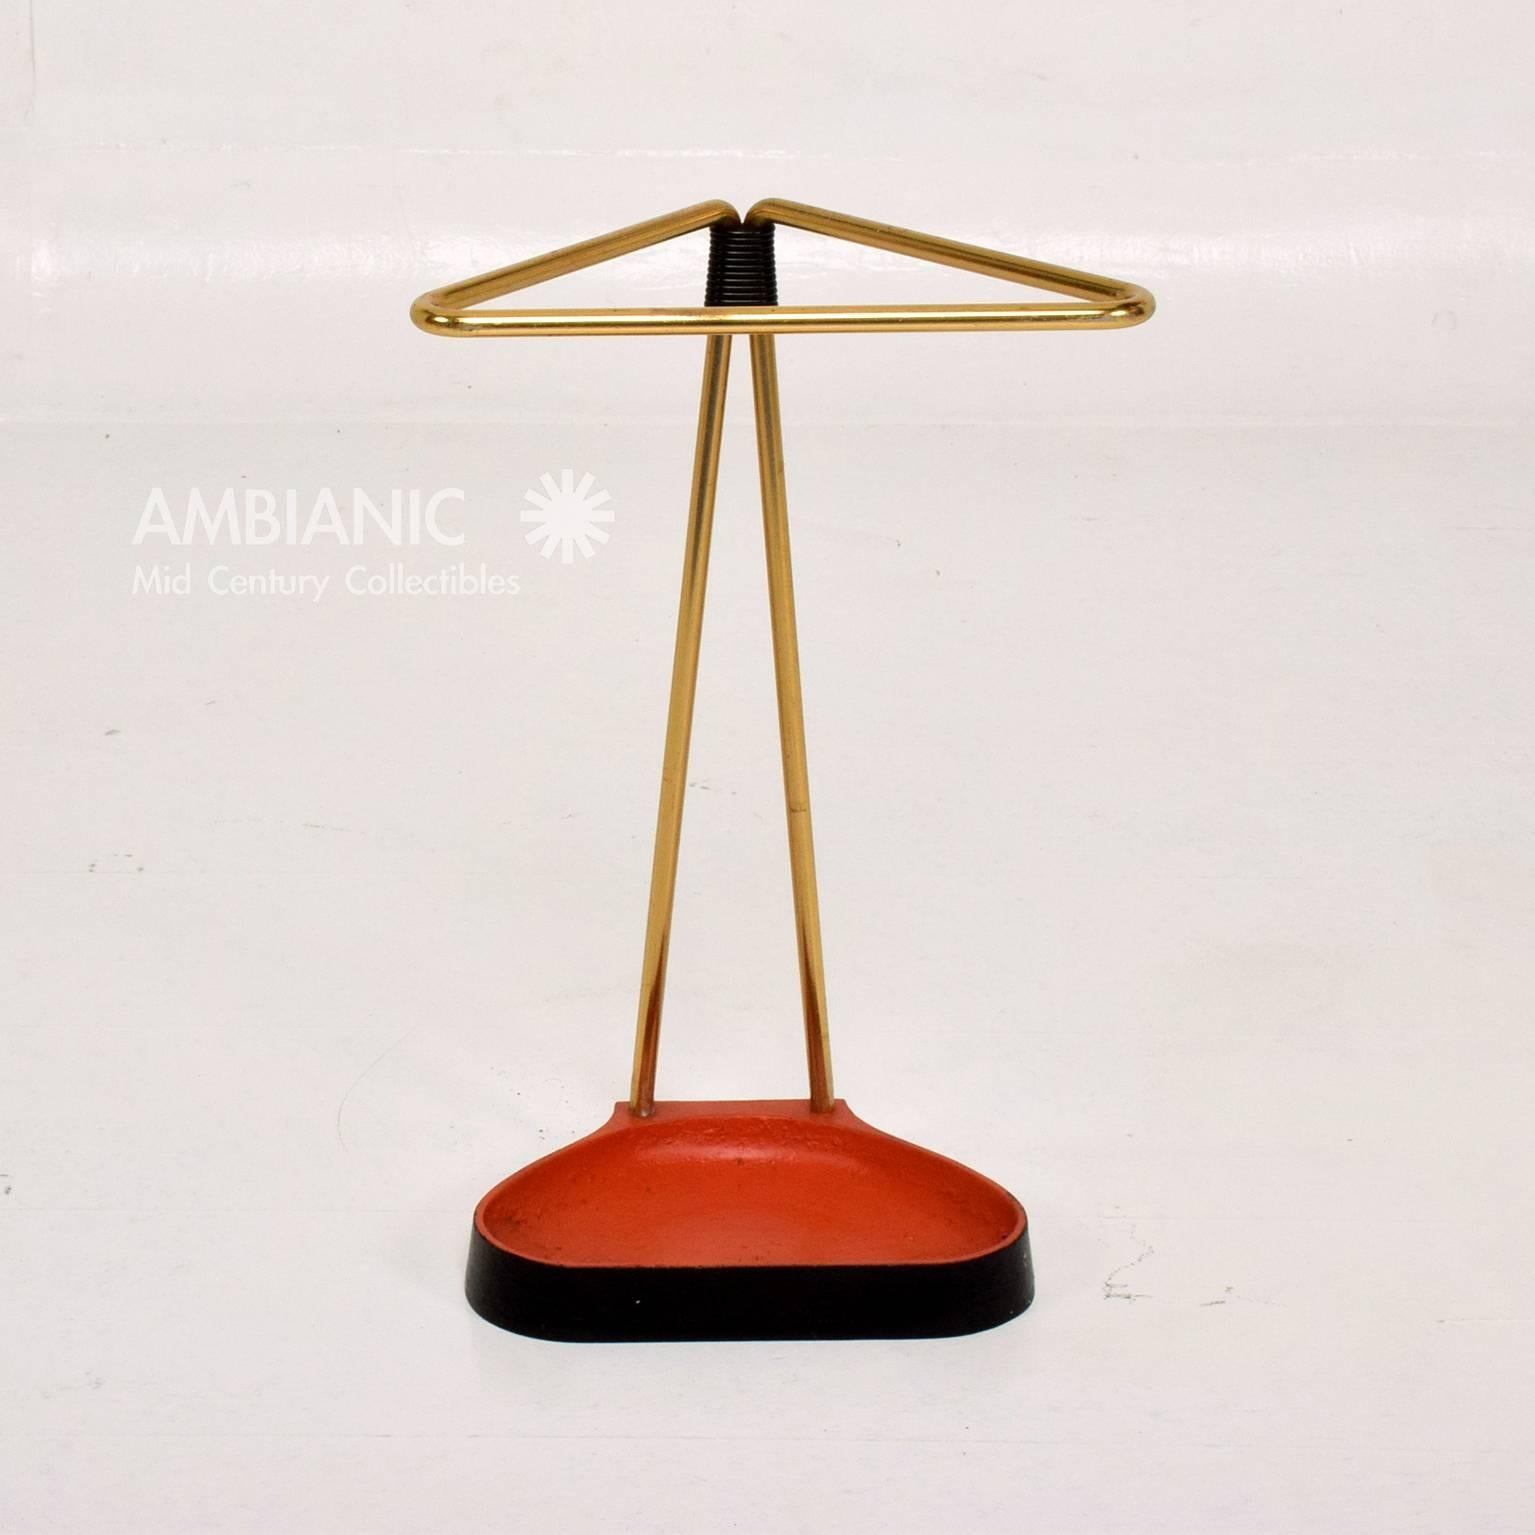 Patinated European Umbrella Stand or Cane Holder Mid-Century